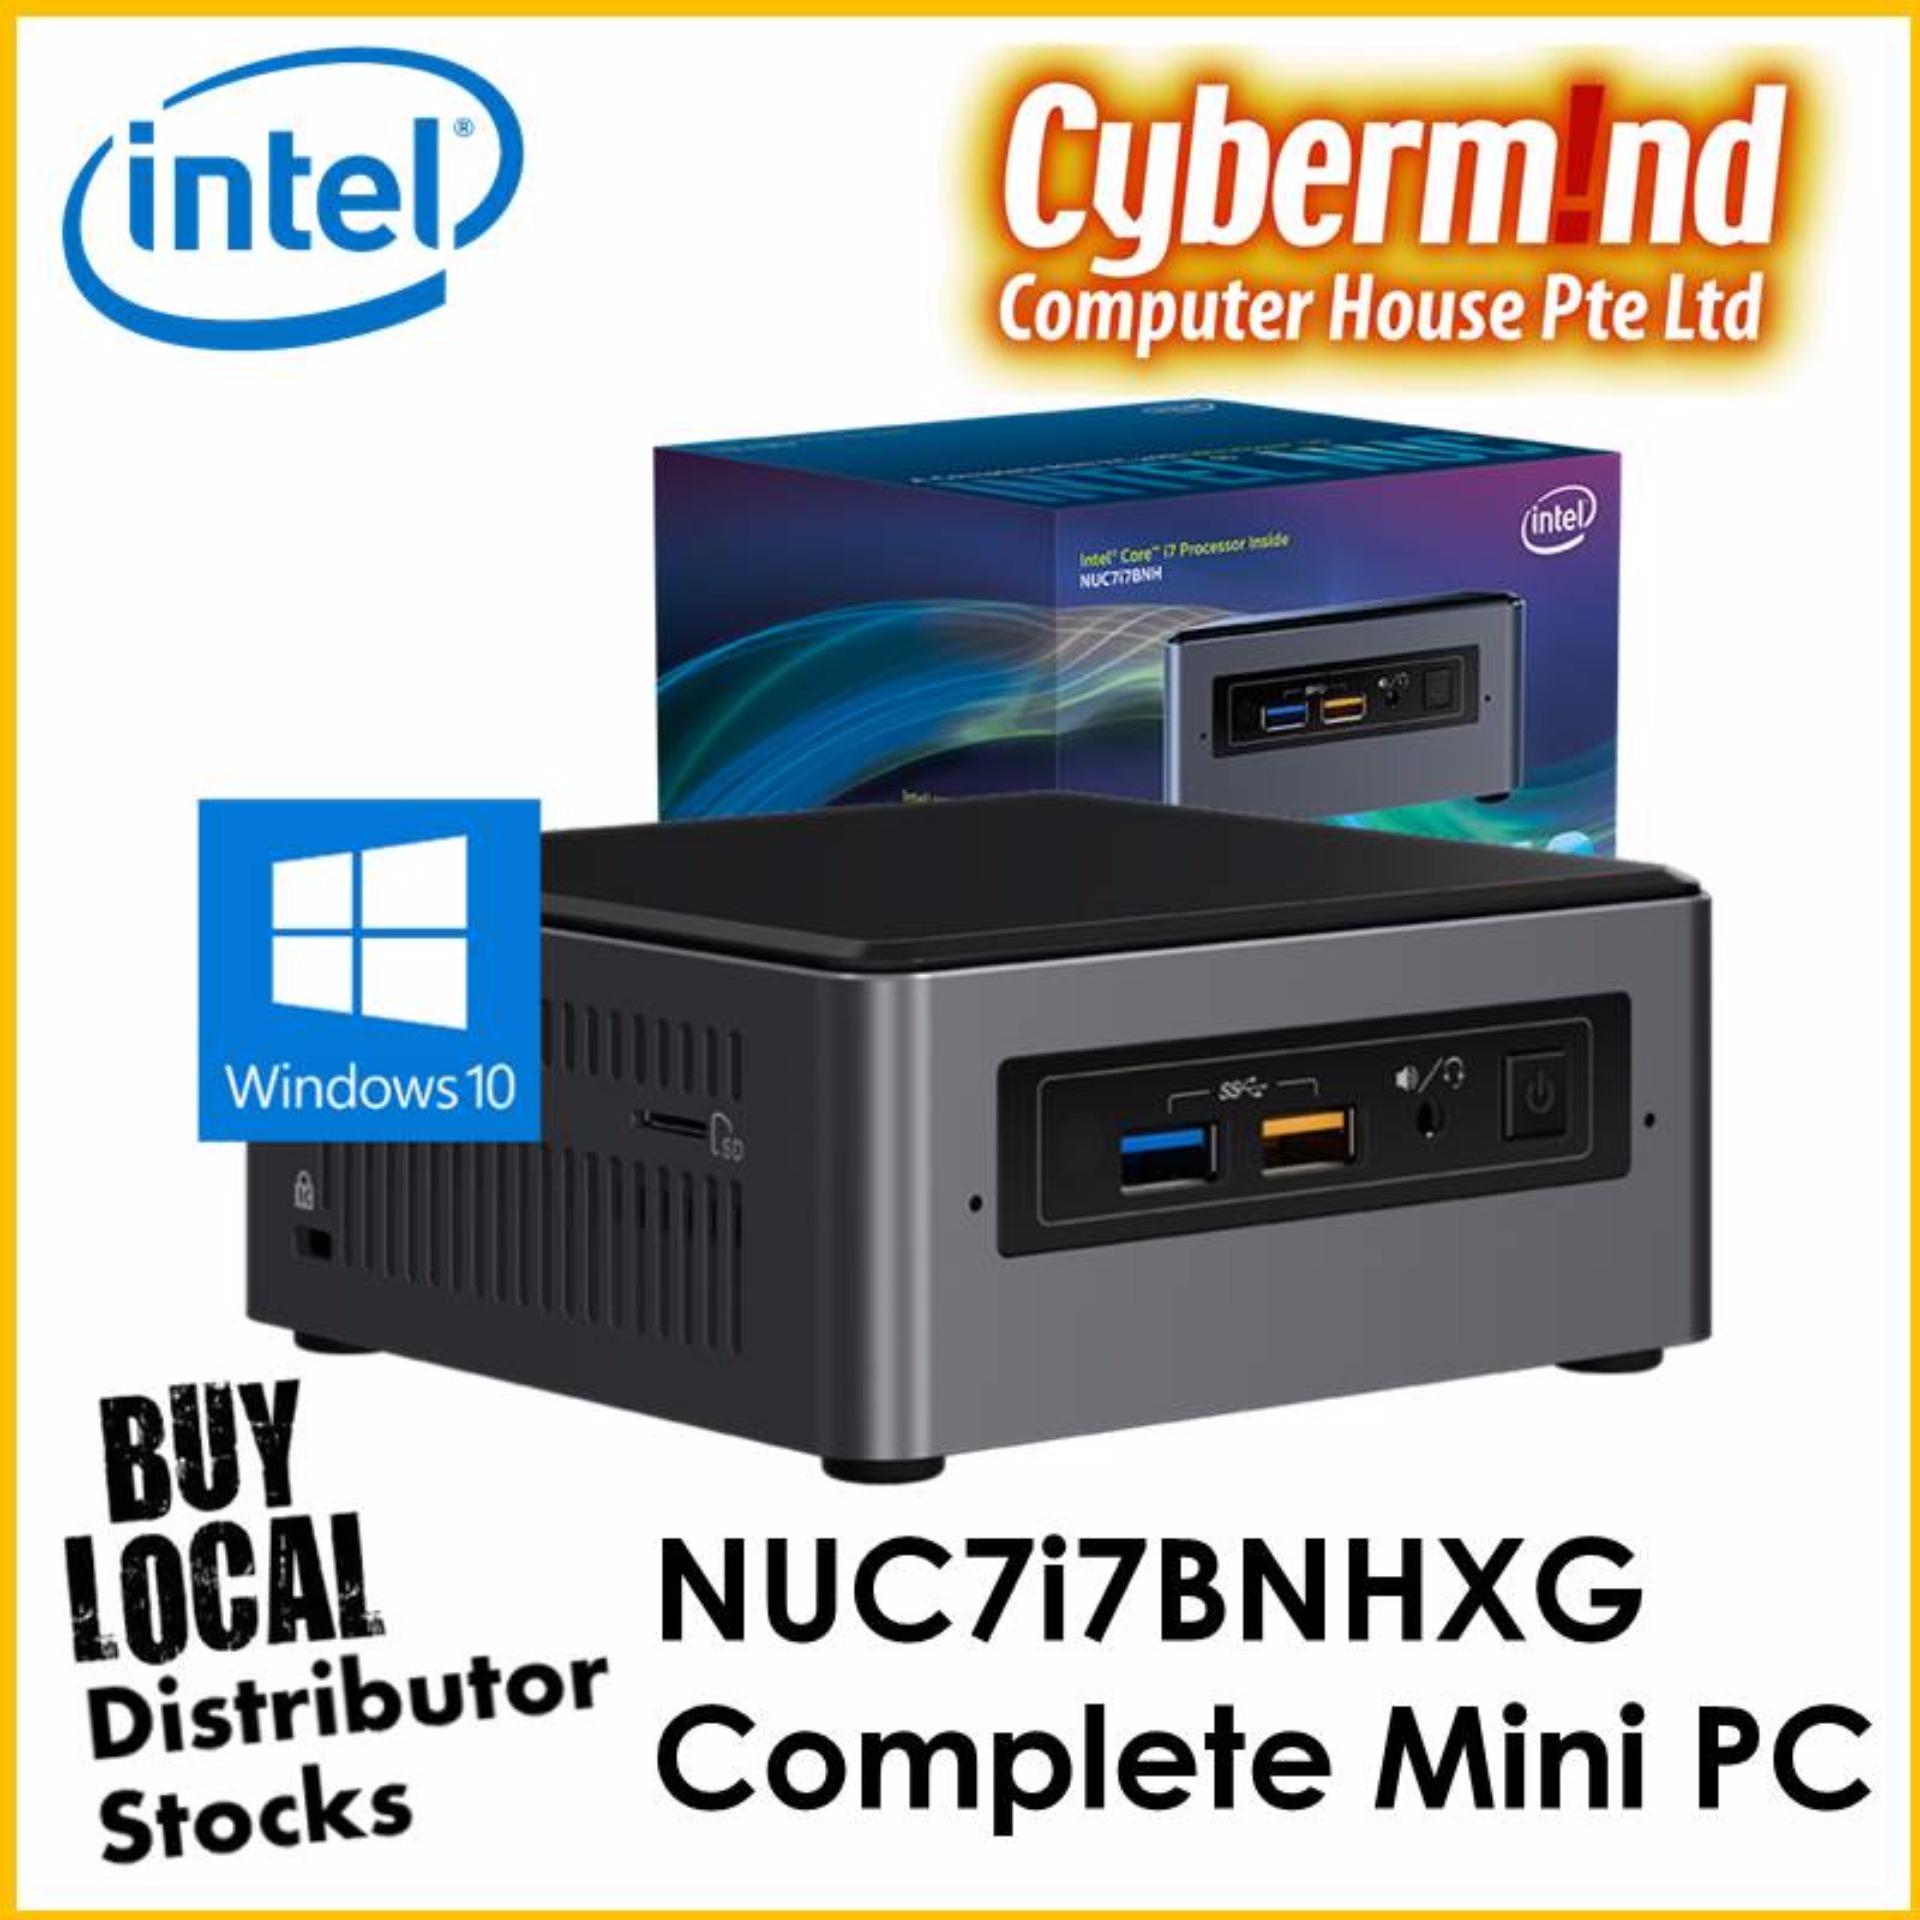 Intel NUC7i7BNHXG Complete Mini PC with Windows 10 & Intel Octane memory (NUC / Small Form Factor)